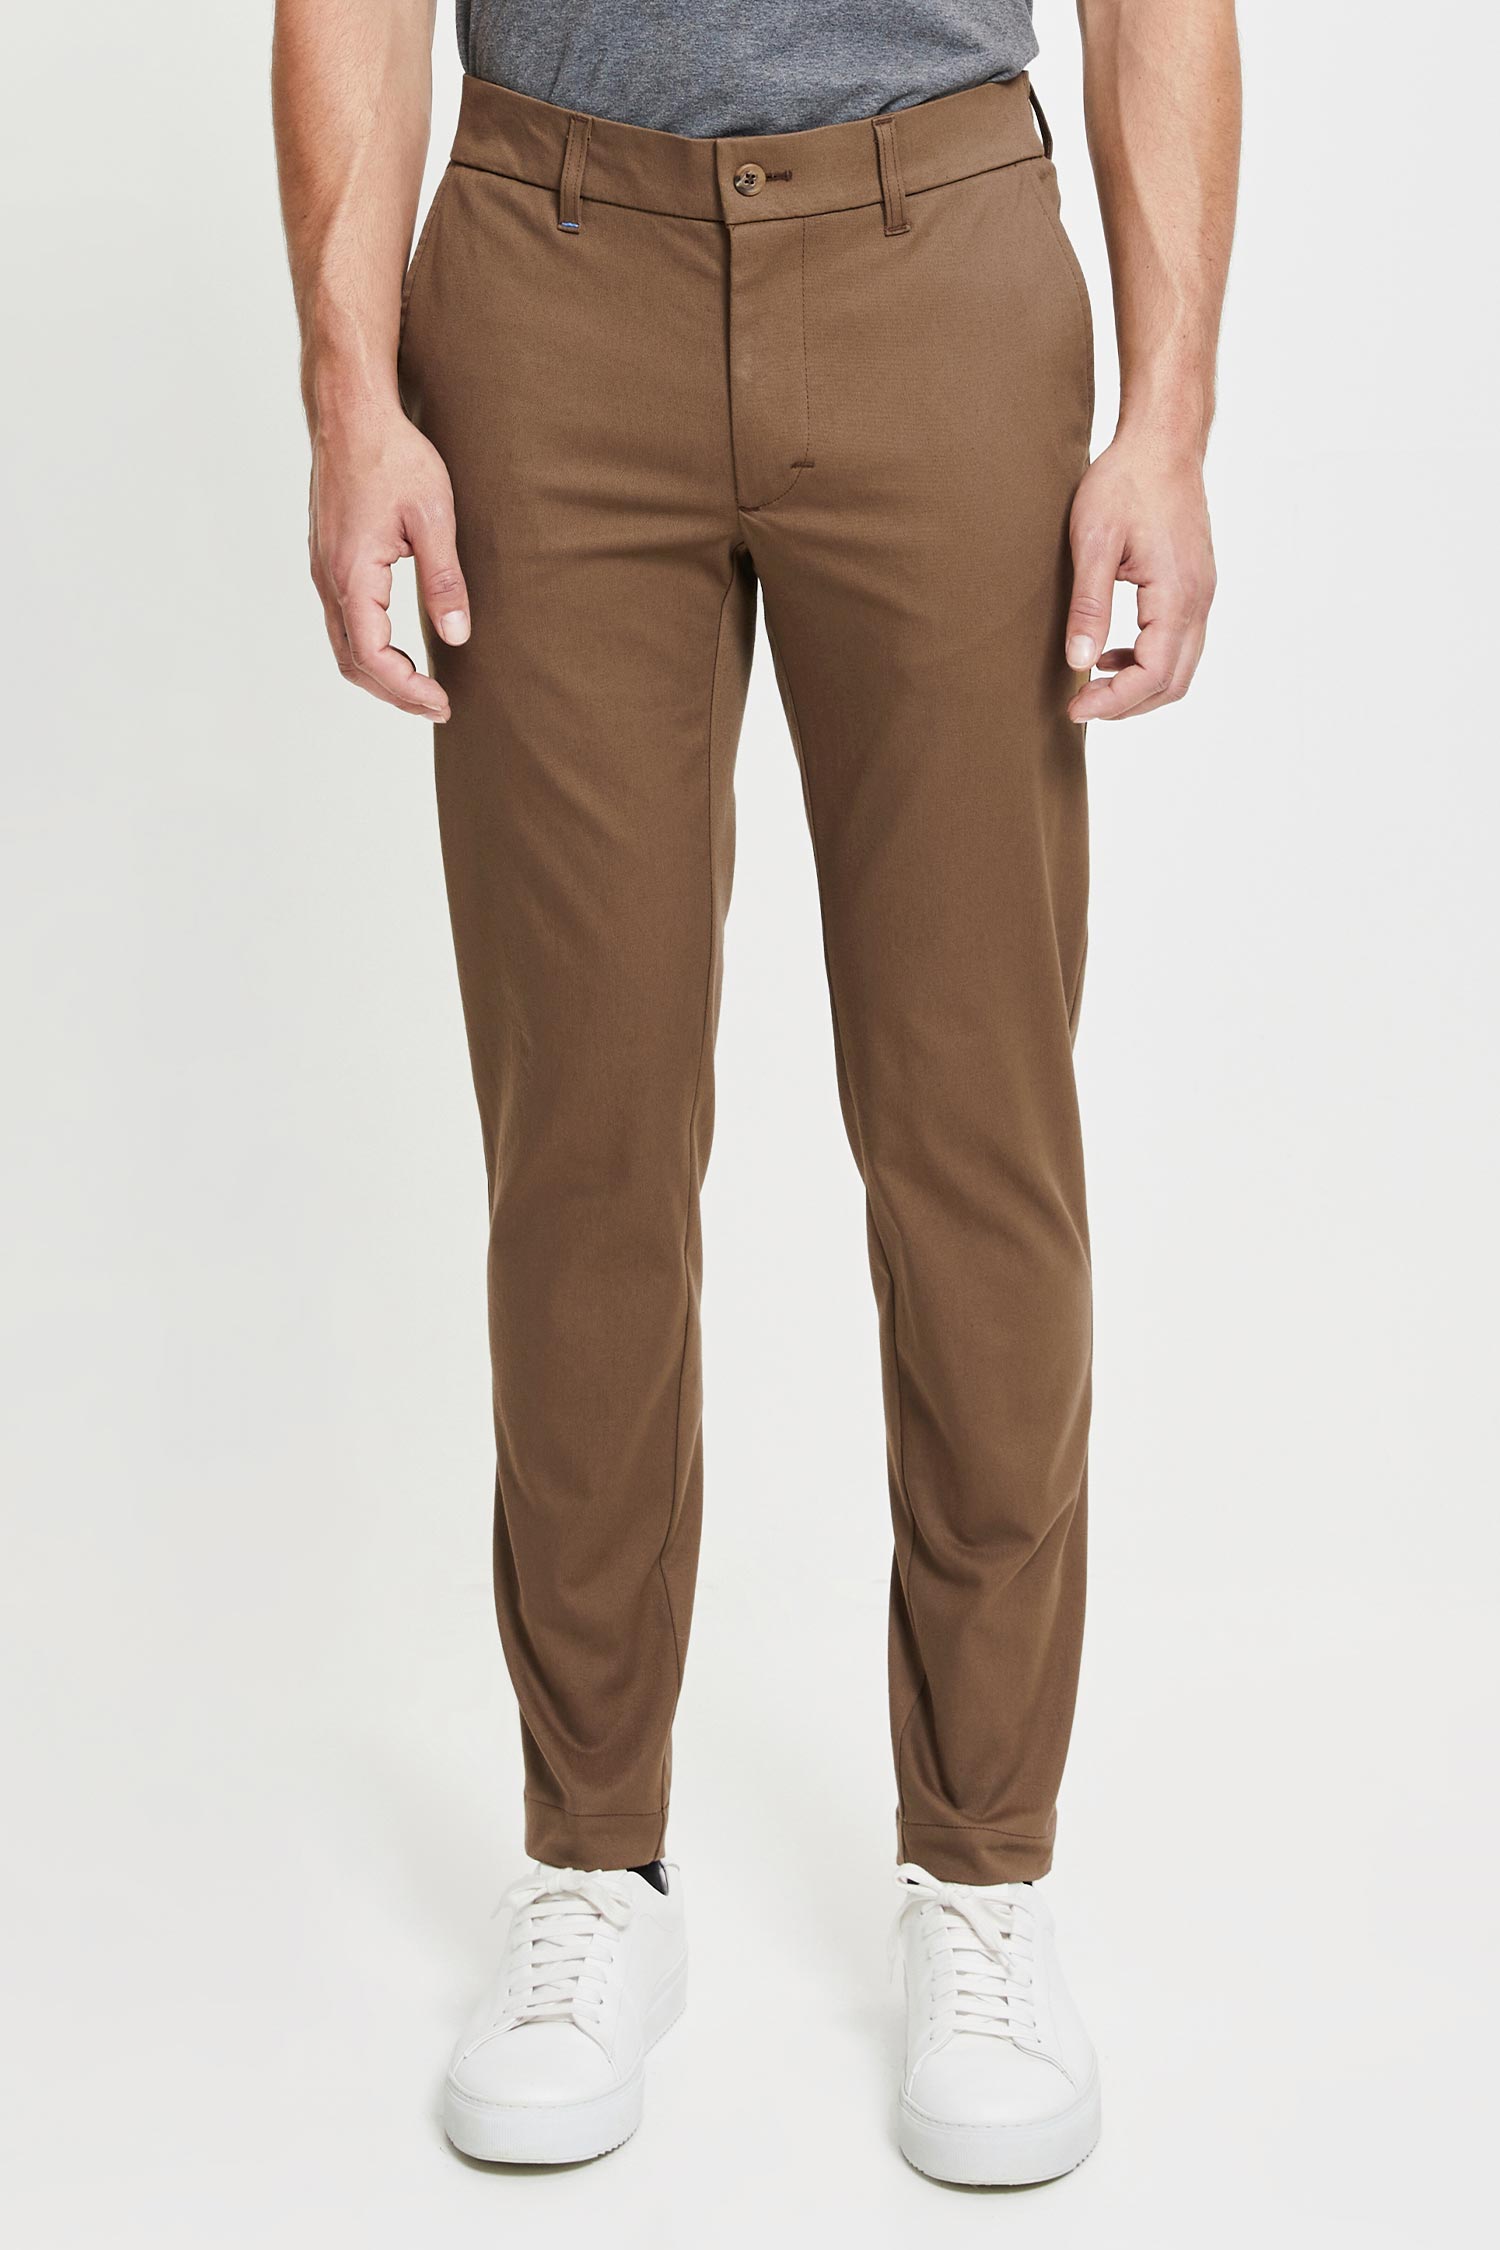 FRENN Seppo sustainable premium quality GOTS organic cotton trousers brown